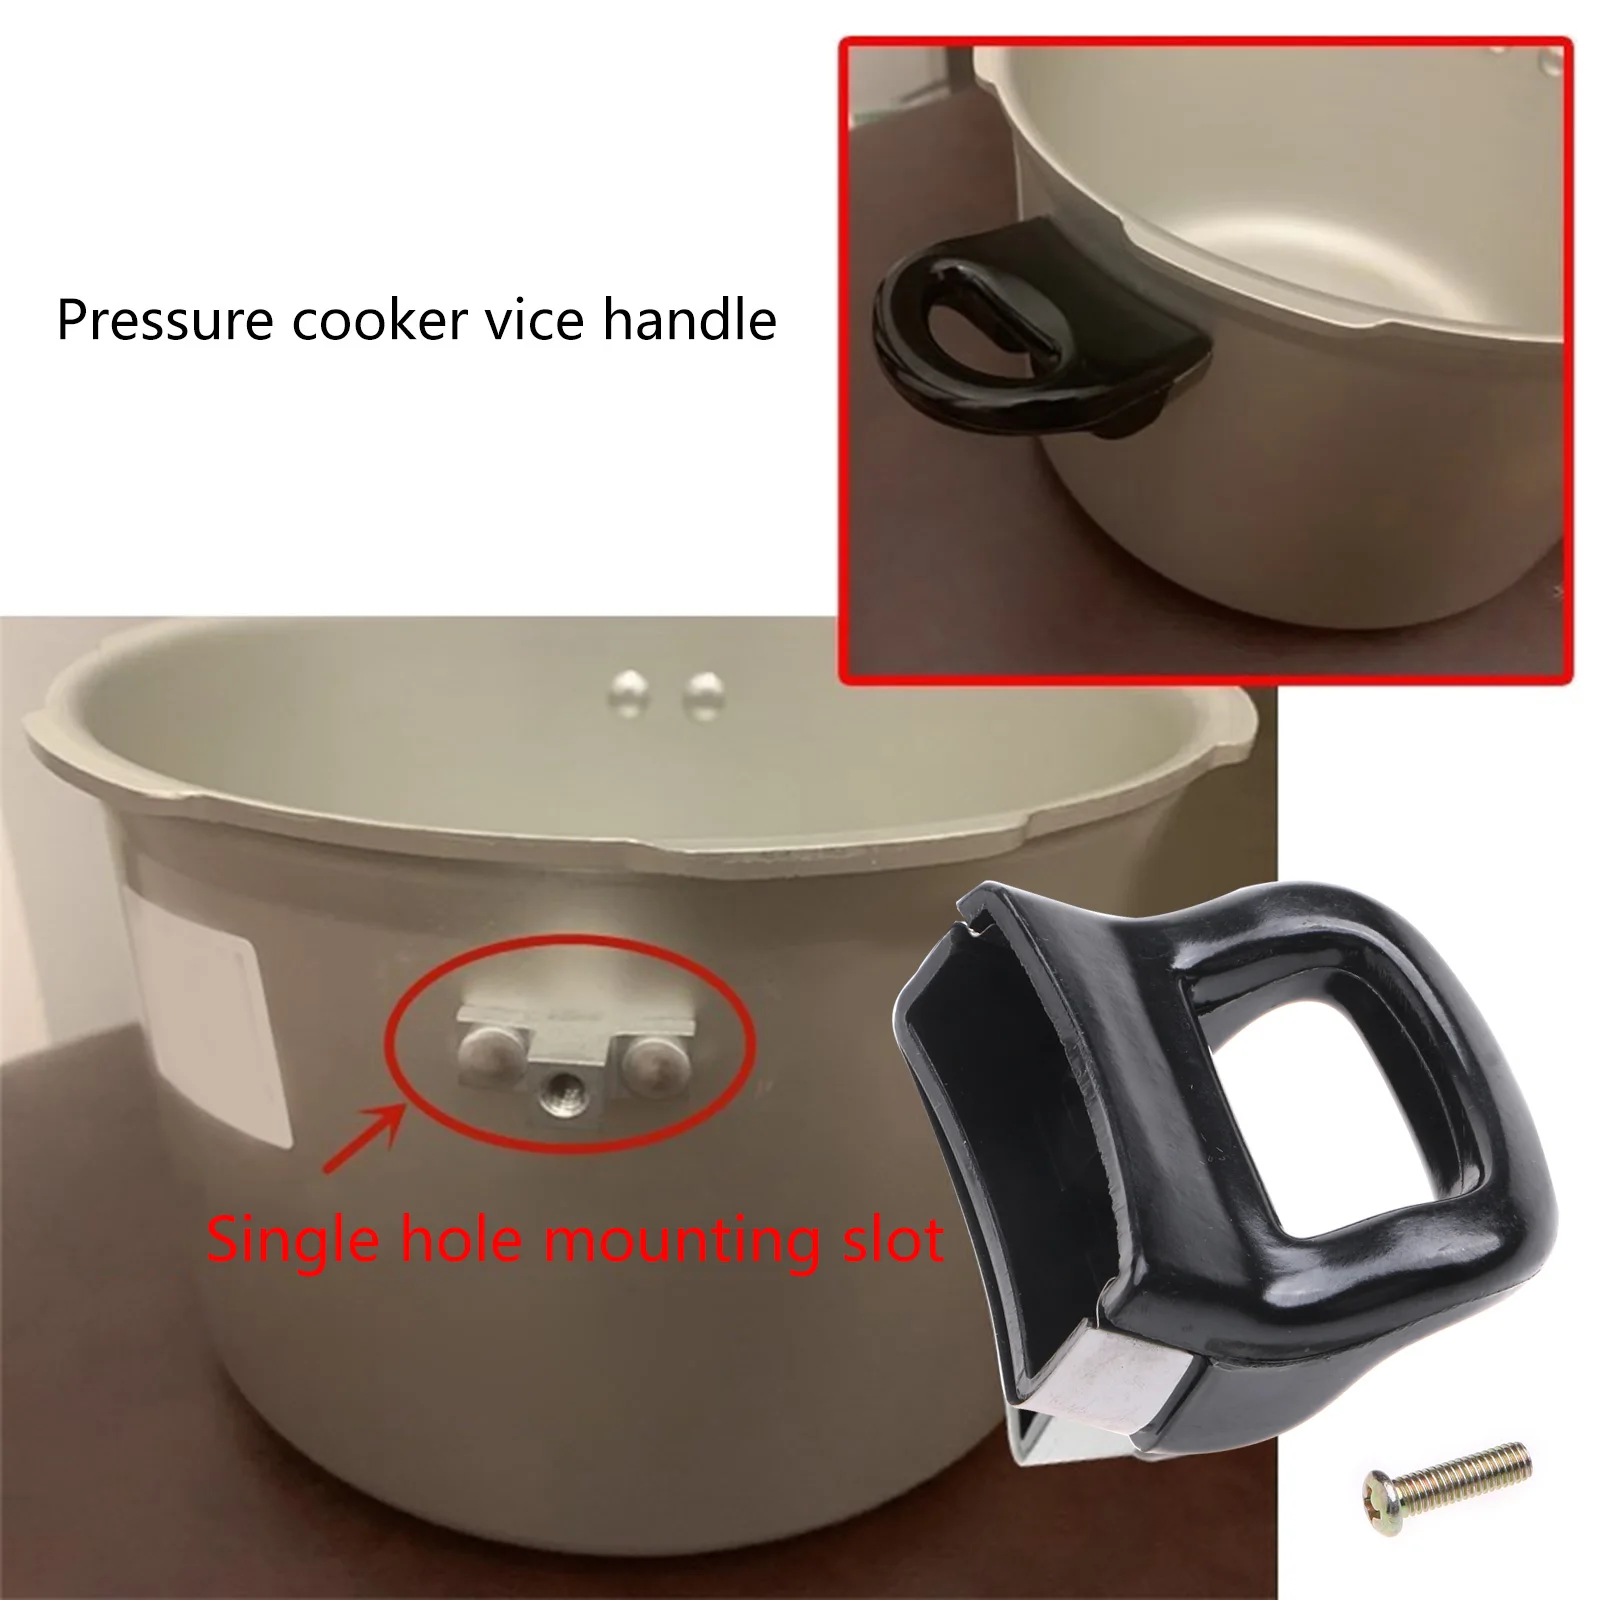 https://ae01.alicdn.com/kf/S4972f506e7c9487583f25da5d964a8fdl/Single-Hole-Pan-Side-Handles-Pressure-Cooker-Steamer-Holder-Handle-Metal-Pot-Grip-Replacement-Handgrip-with.jpg